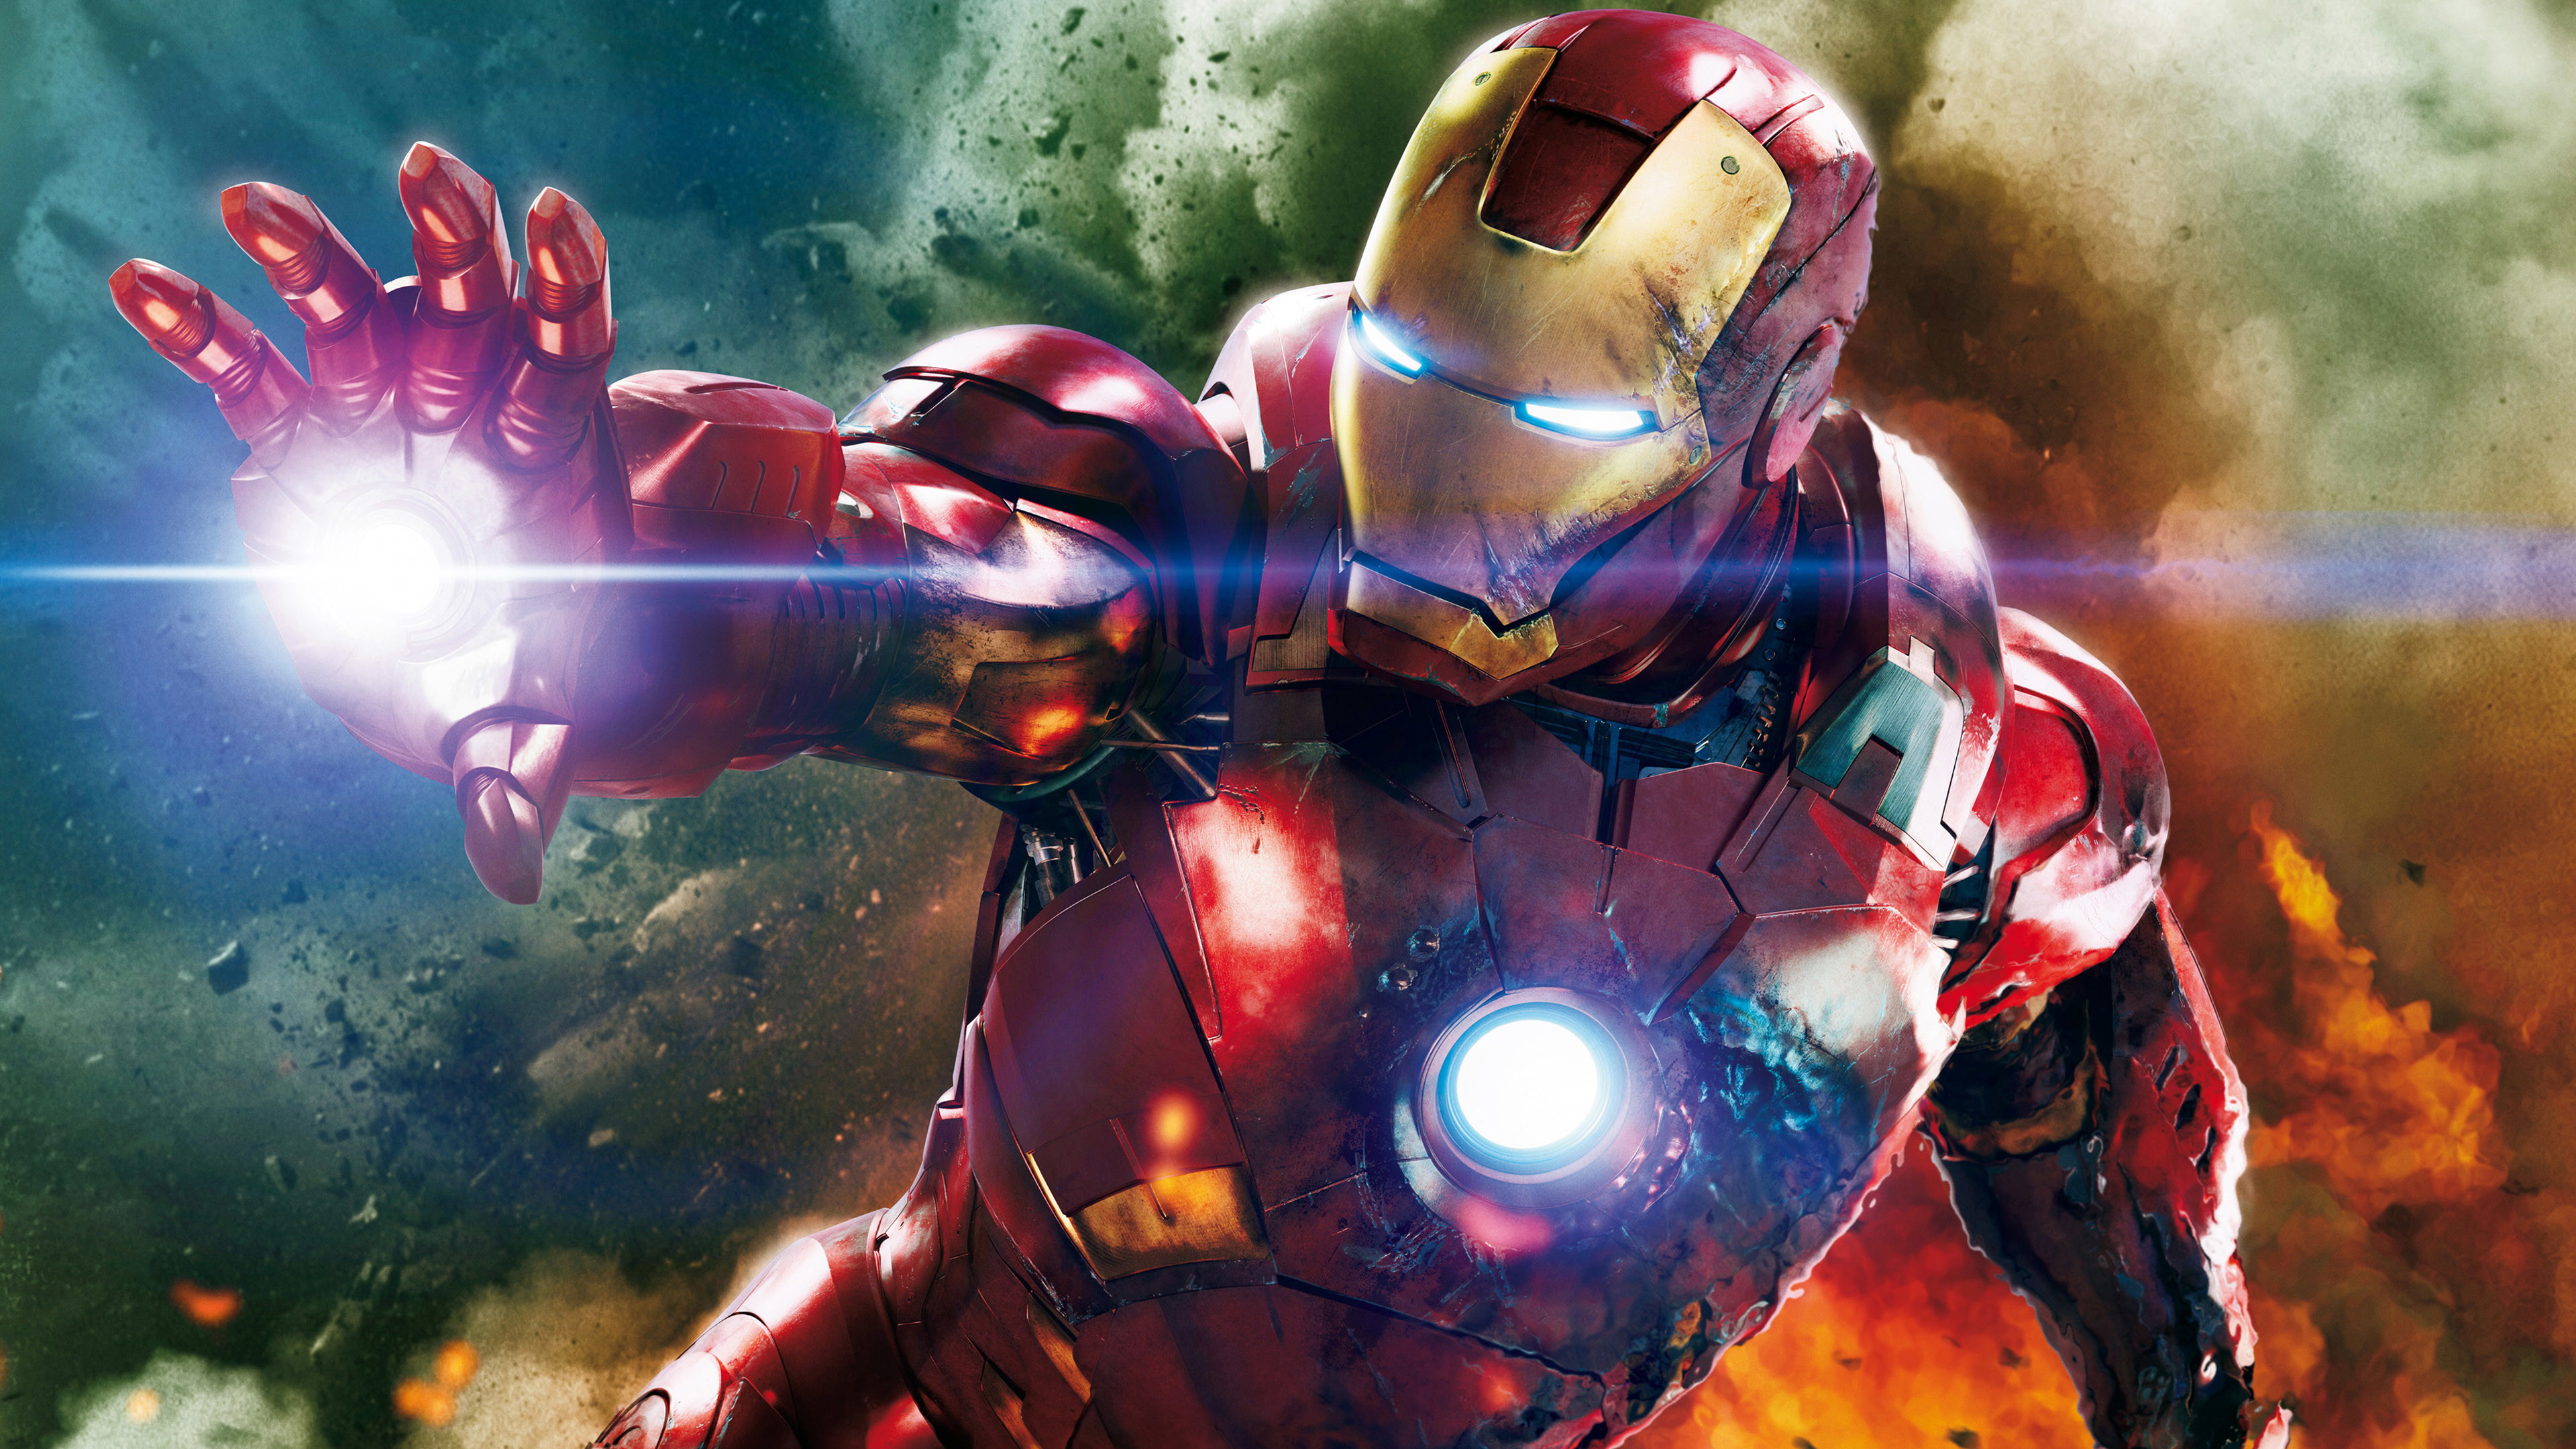 3840x2160 ... Iron Man The Avengers Wallpaper in 4K ...